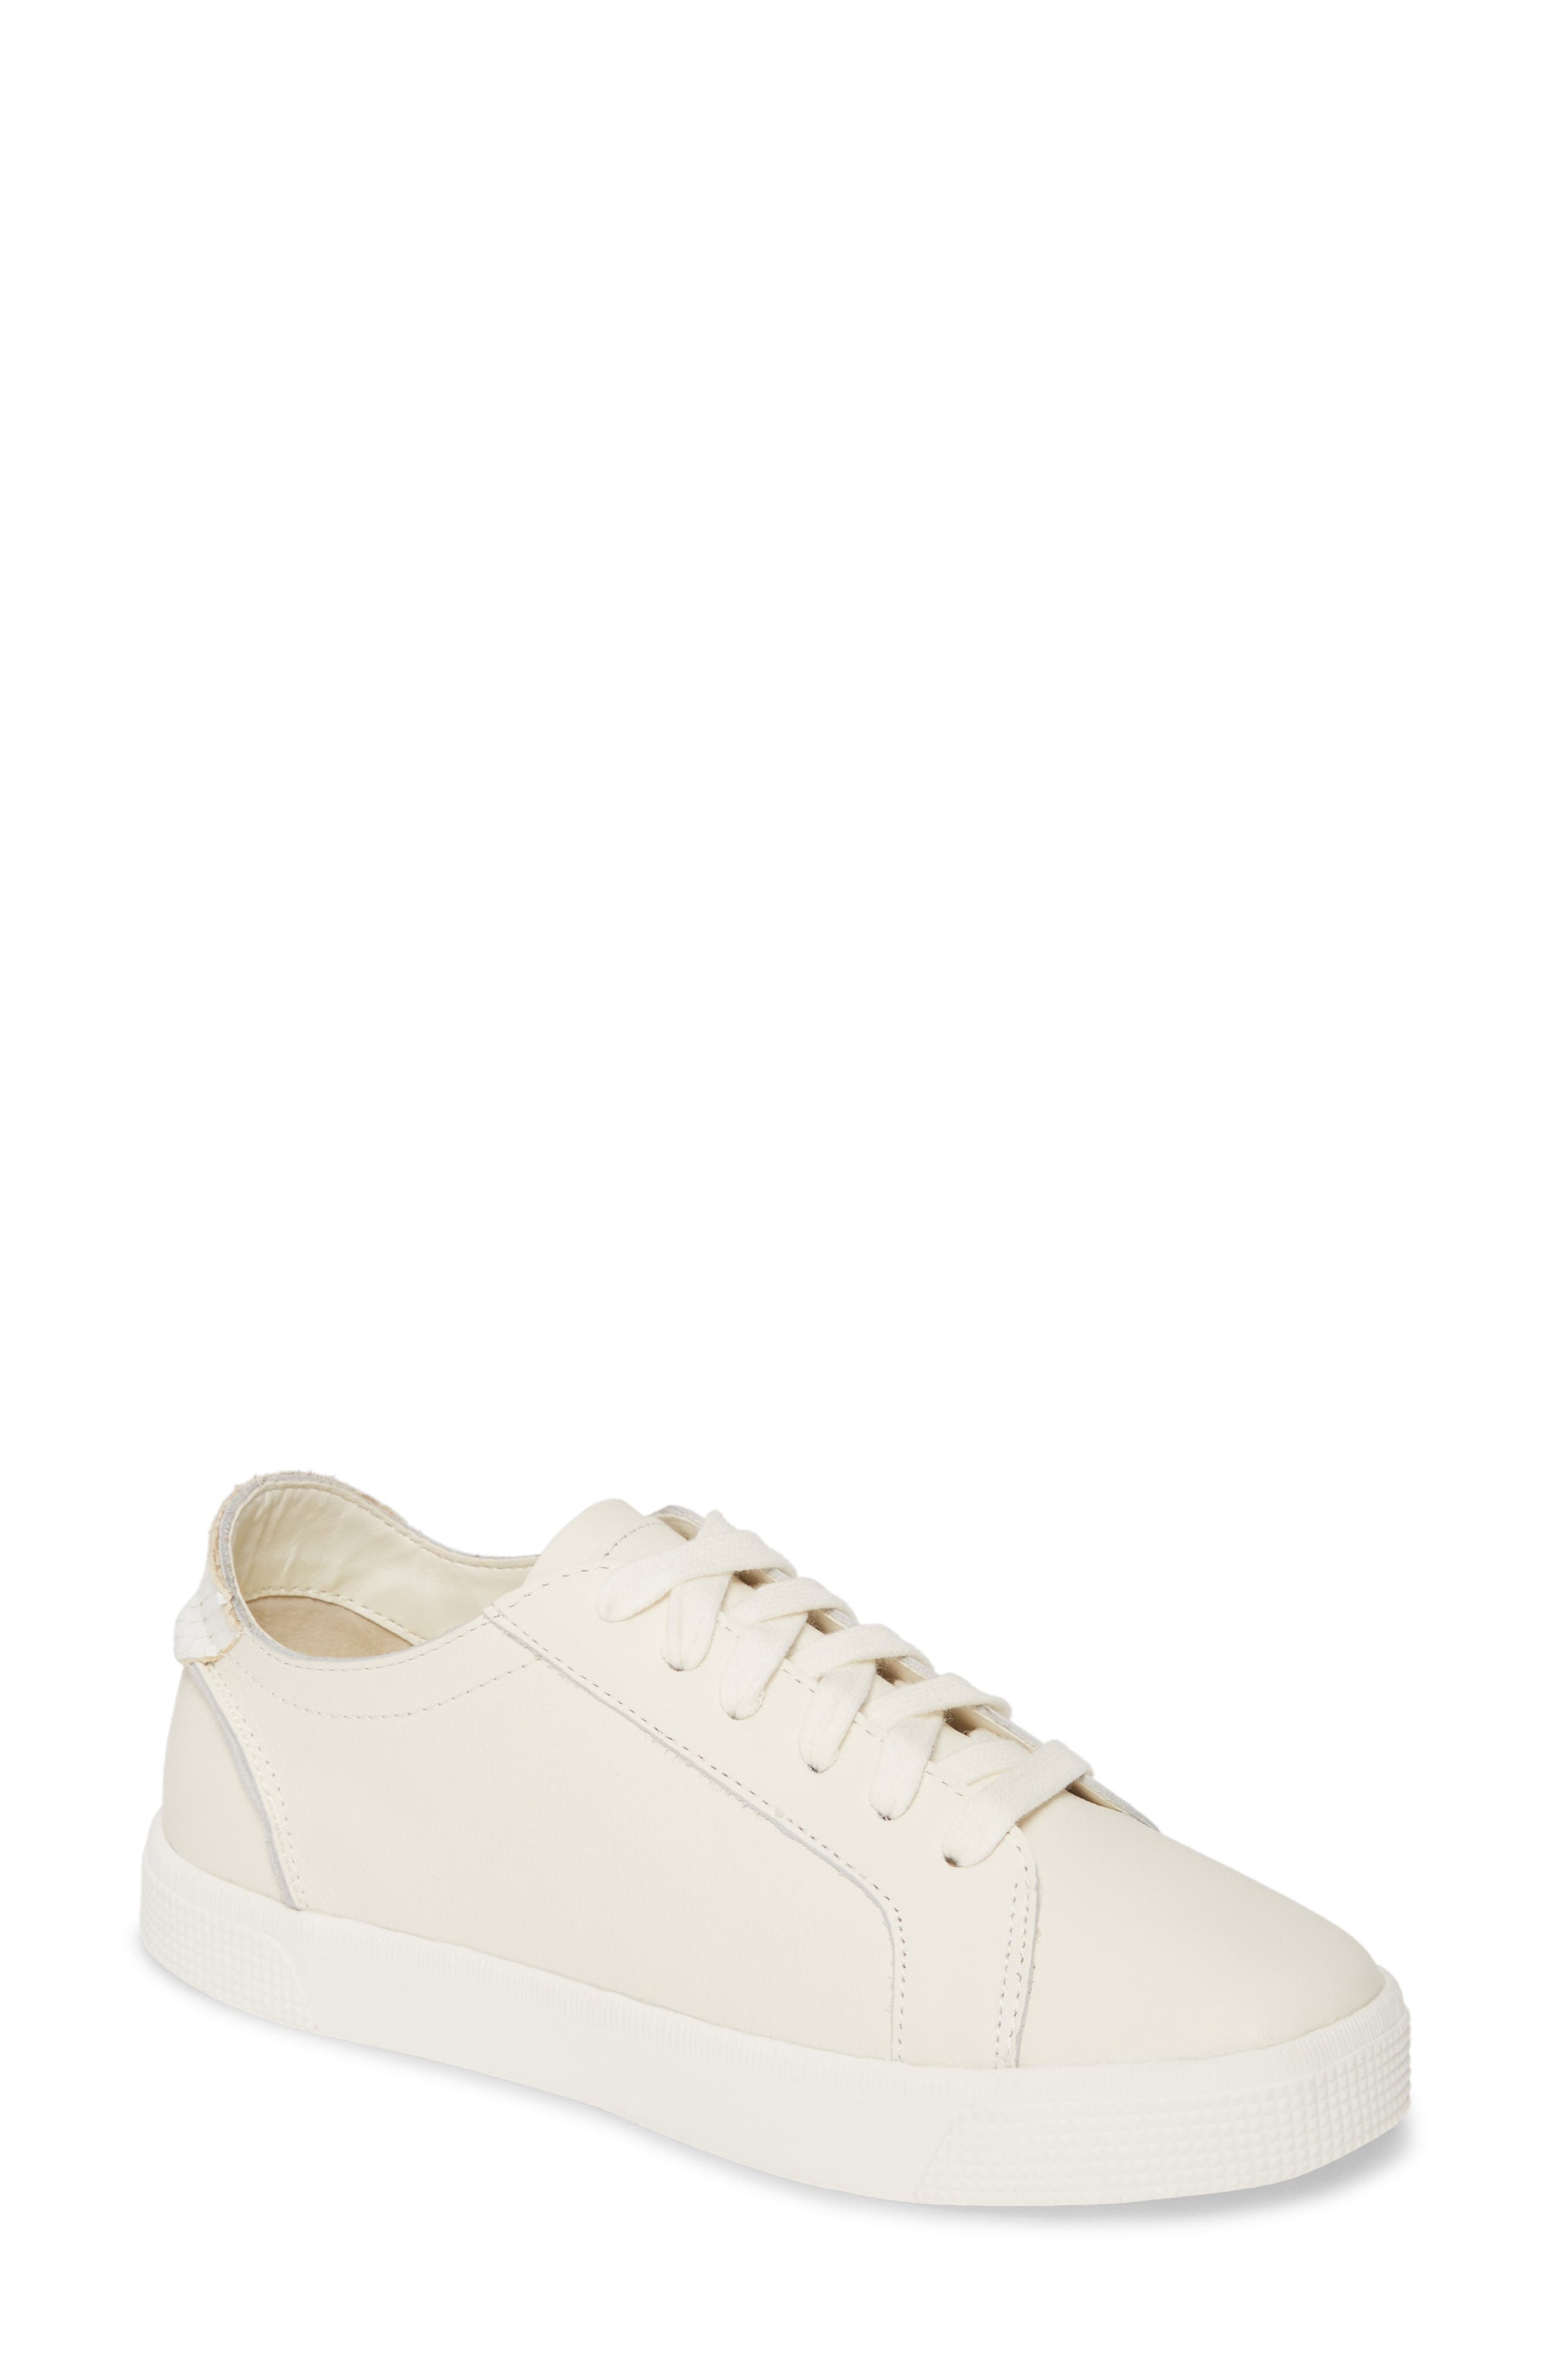 dolce vita white shoes